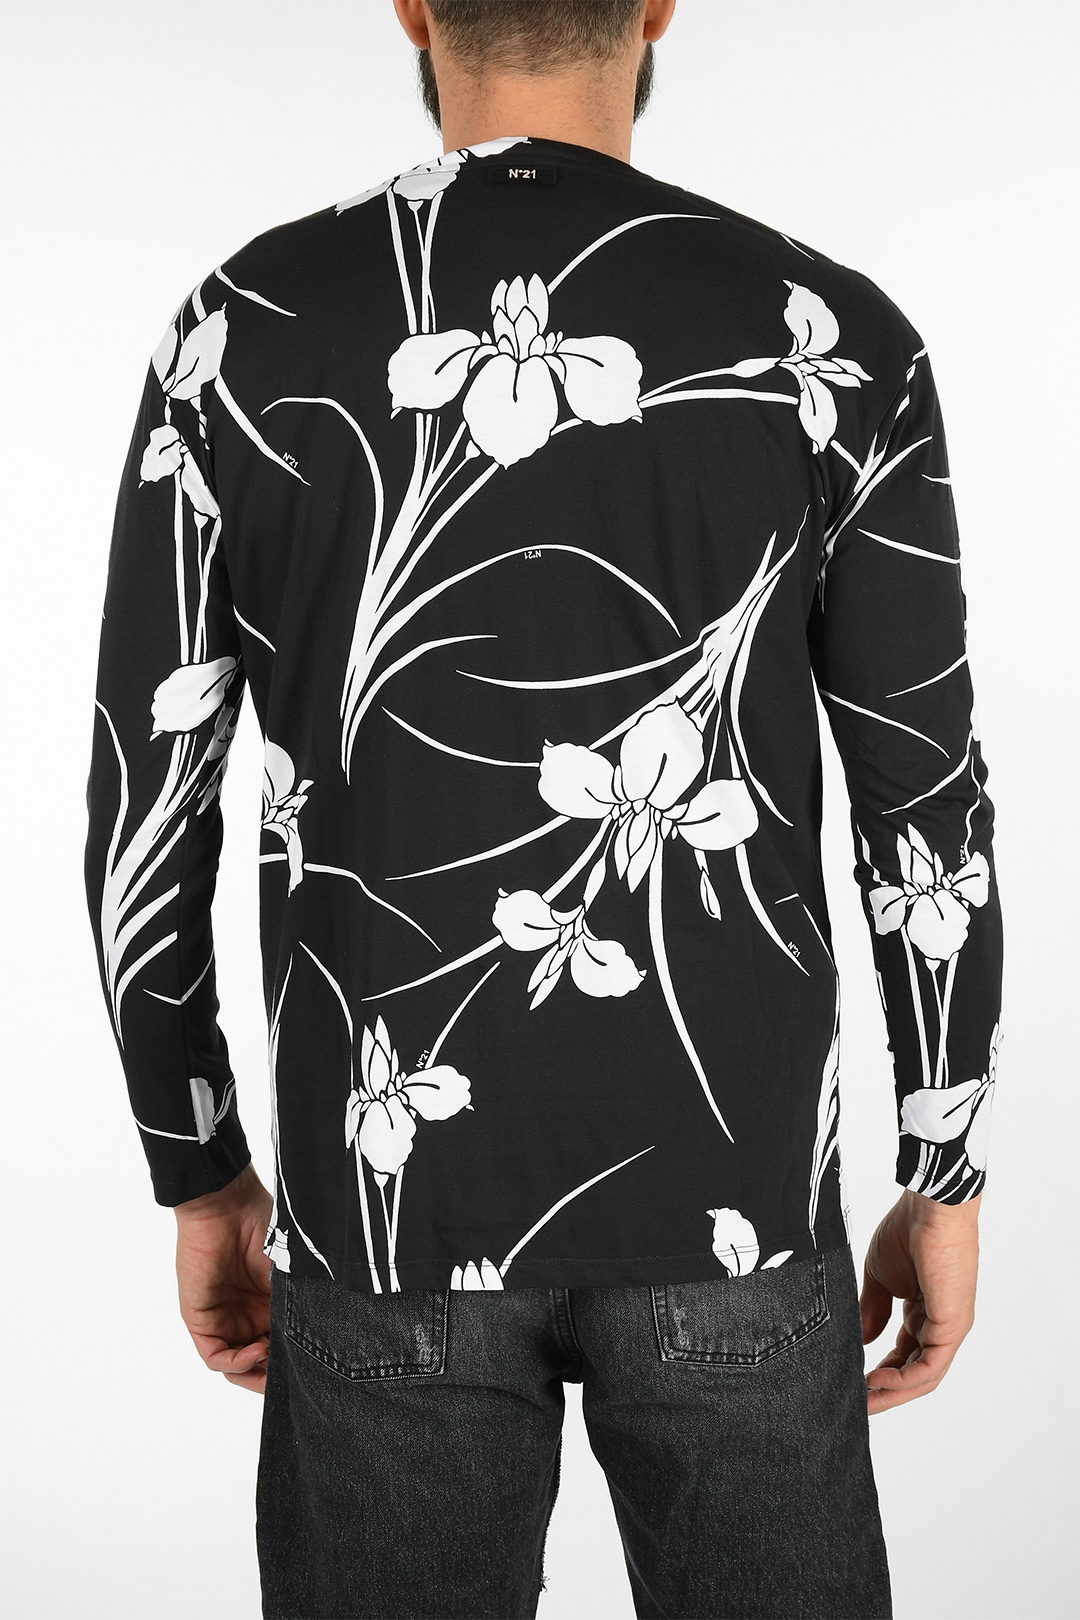 YUNY Mens Long-Sleeved Print Comfort Comfort Business Shirts Flower M 